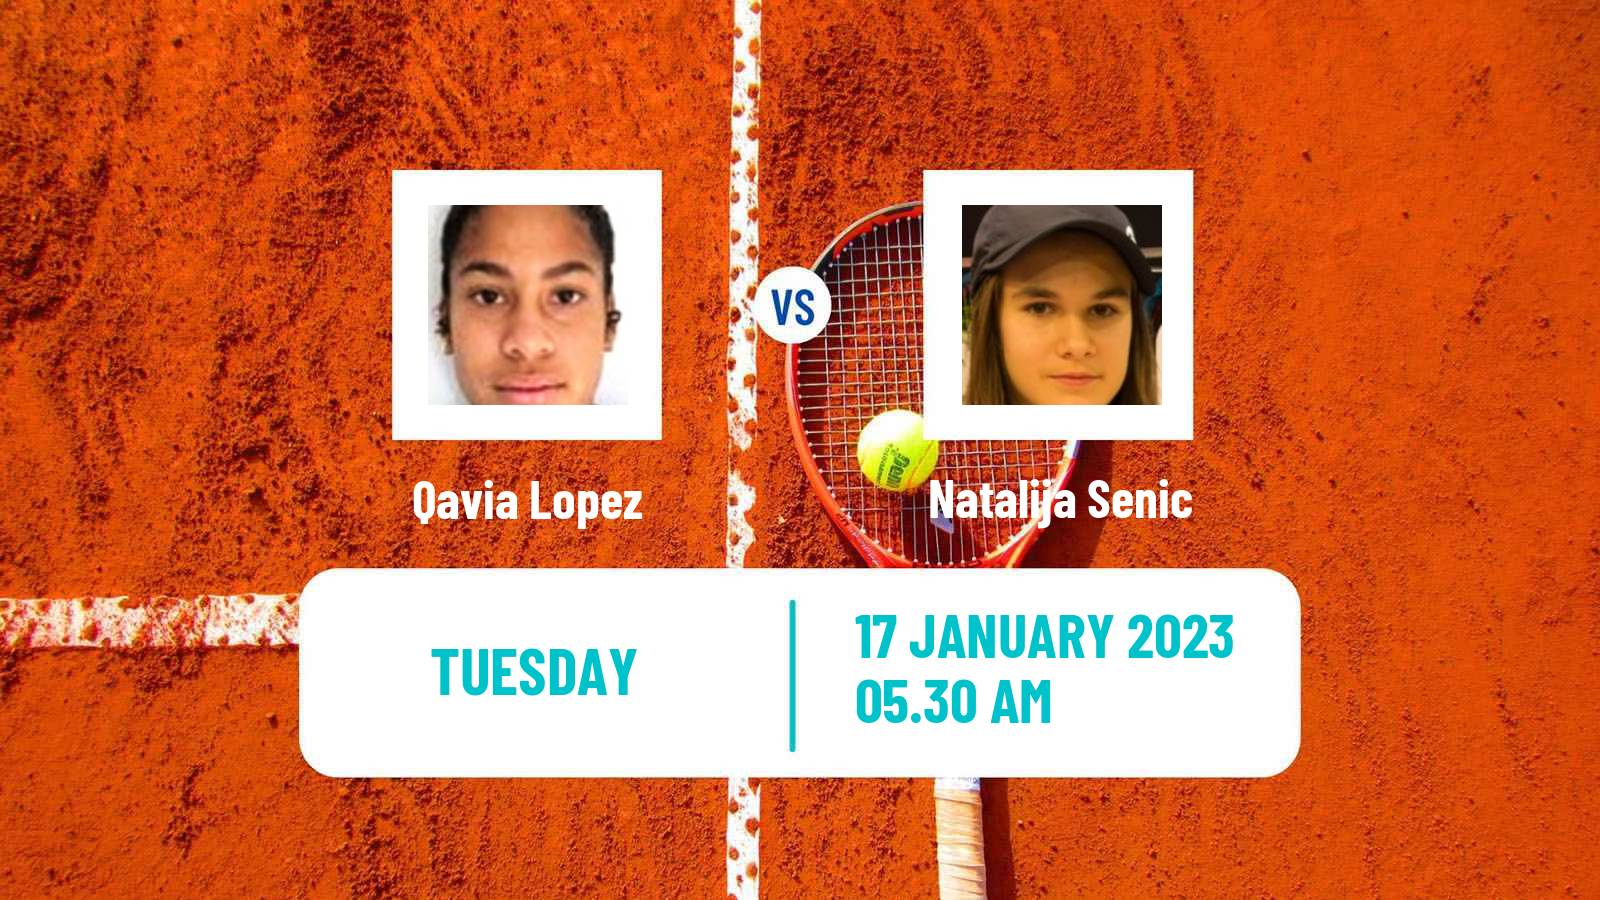 Tennis ITF Tournaments Qavia Lopez - Natalija Senic